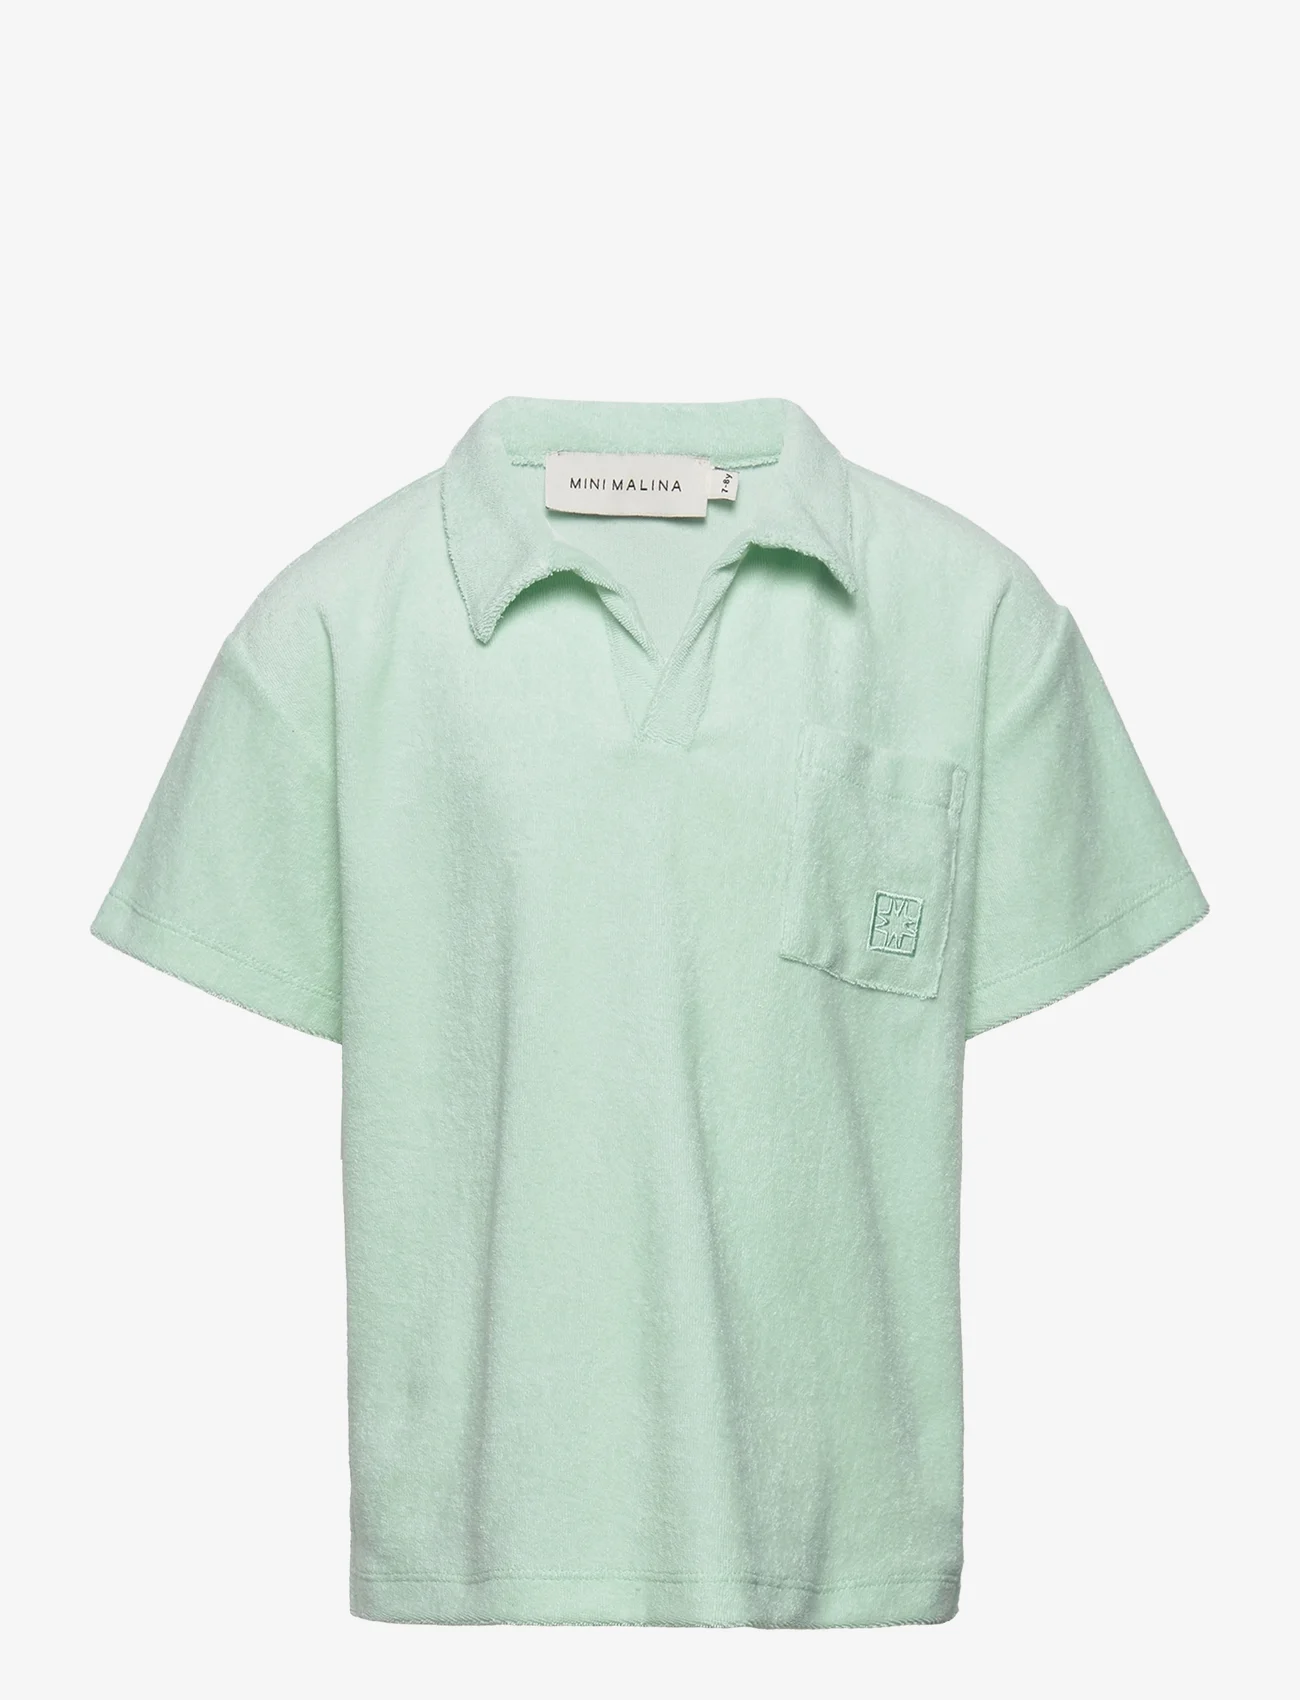 Malina - Mini Rio pike - short-sleeved shirts - aqua - 0